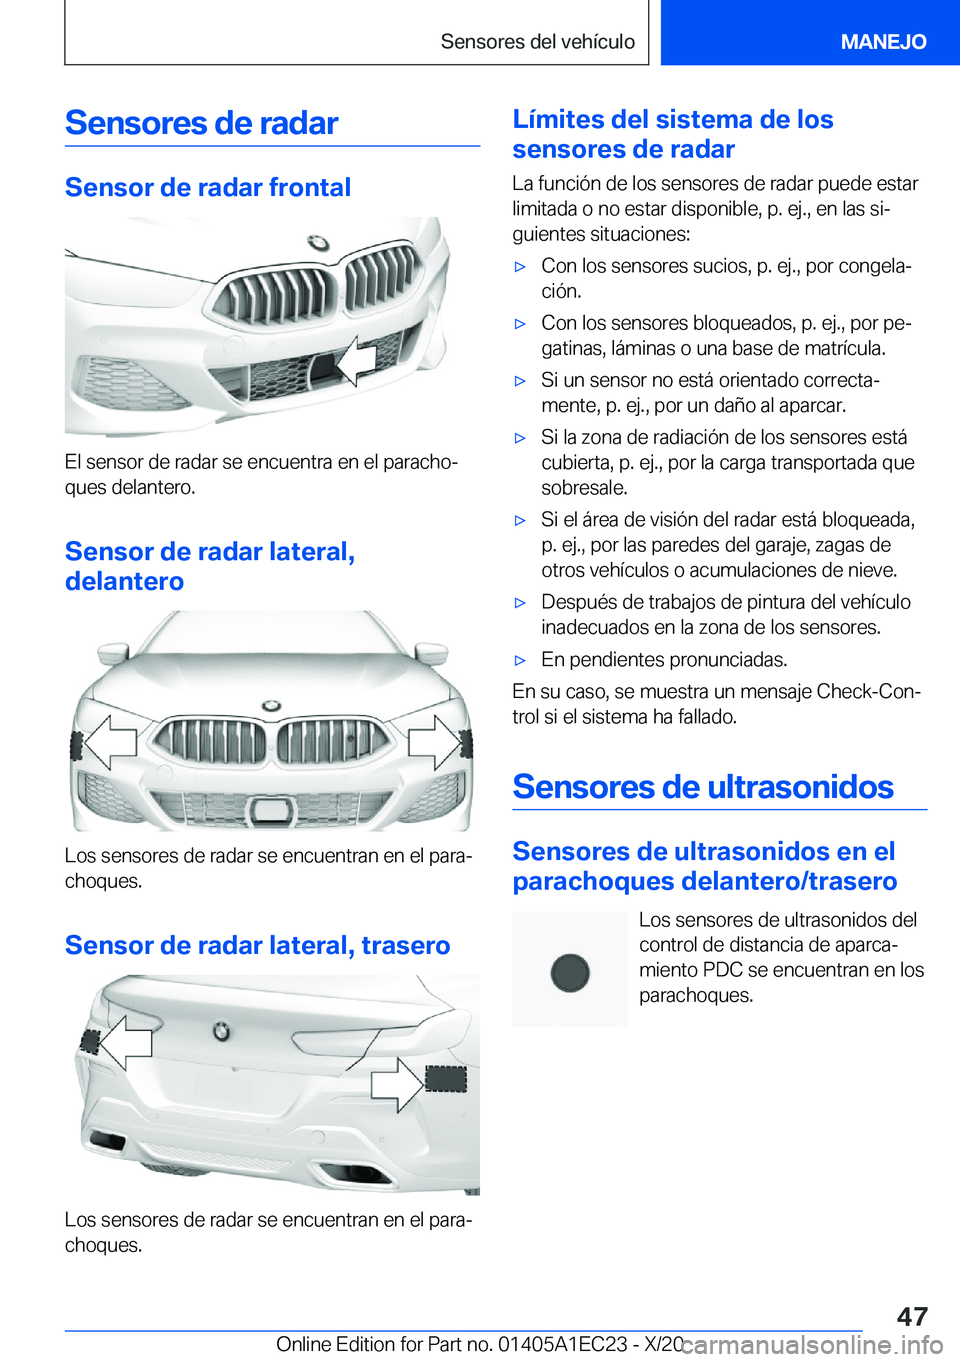 BMW 8 SERIES GRAN COUPE 2021  Manuales de Empleo (in Spanish) �S�e�n�s�o�r�e�s��d�e��r�a�d�a�r
�S�e�n�s�o�r��d�e��r�a�d�a�r��f�r�o�n�t�a�l
�E�l��s�e�n�s�o�r��d�e��r�a�d�a�r��s�e��e�n�c�u�e�n�t�r�a��e�n��e�l��p�a�r�a�c�h�oª
�q�u�e�s��d�e�l�a�n�t�e